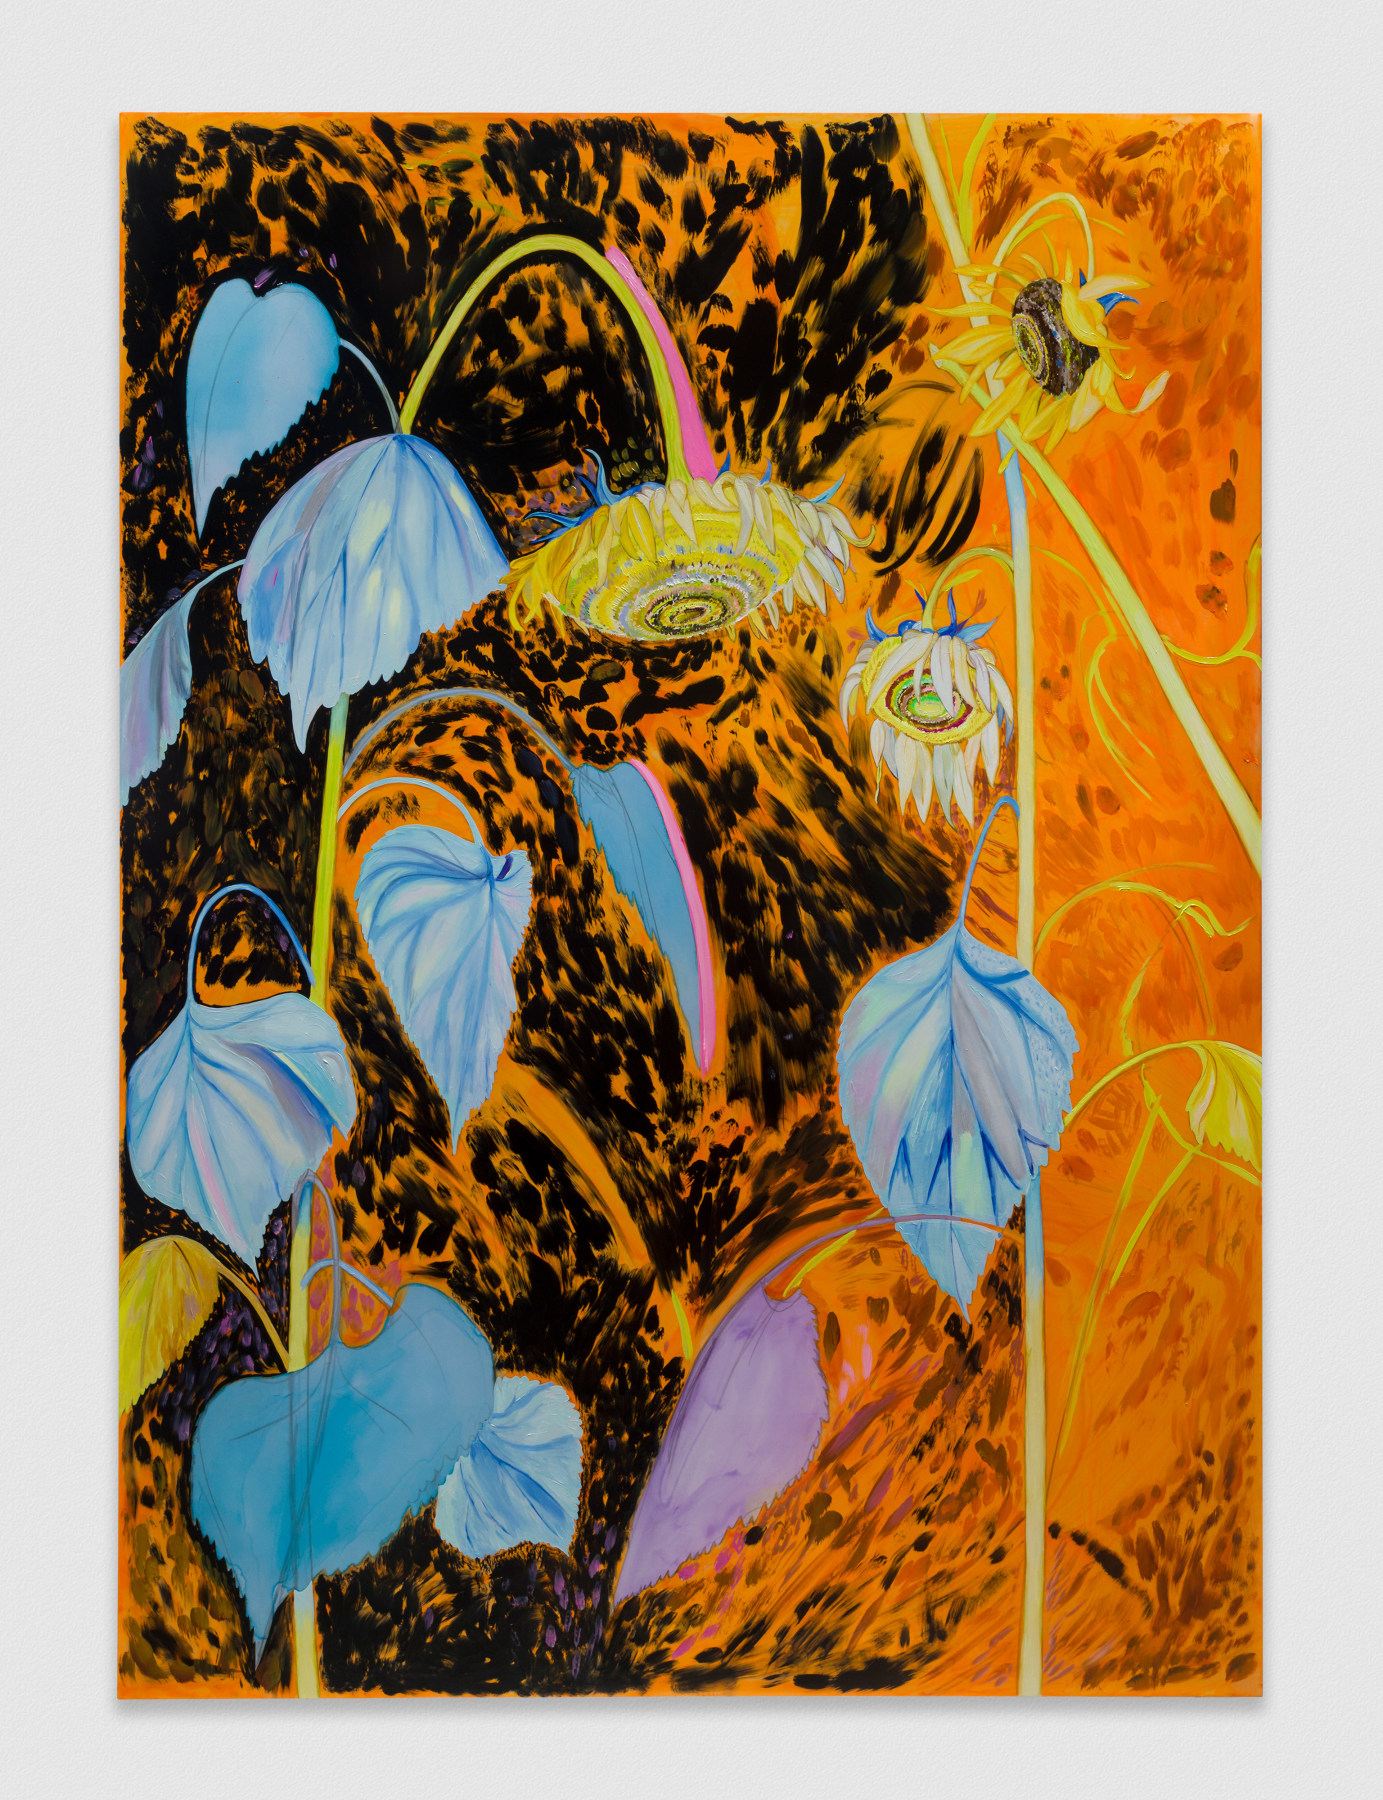 Paul Heyer, "Sunflowers", Artwork